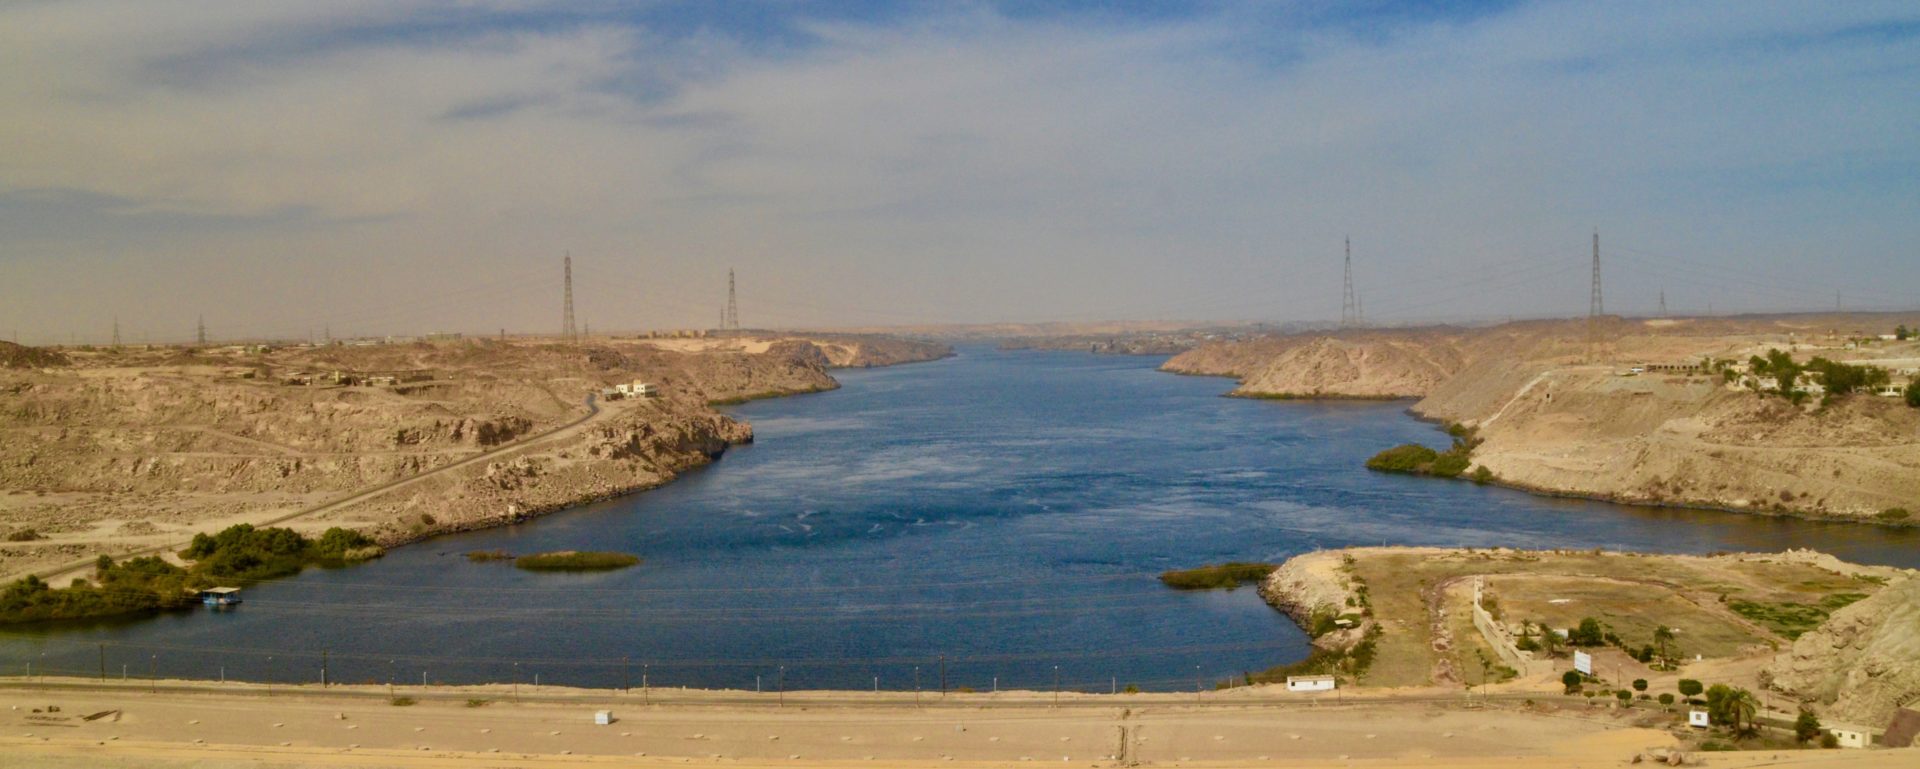 Below the High Dam, Aswan, Nubia